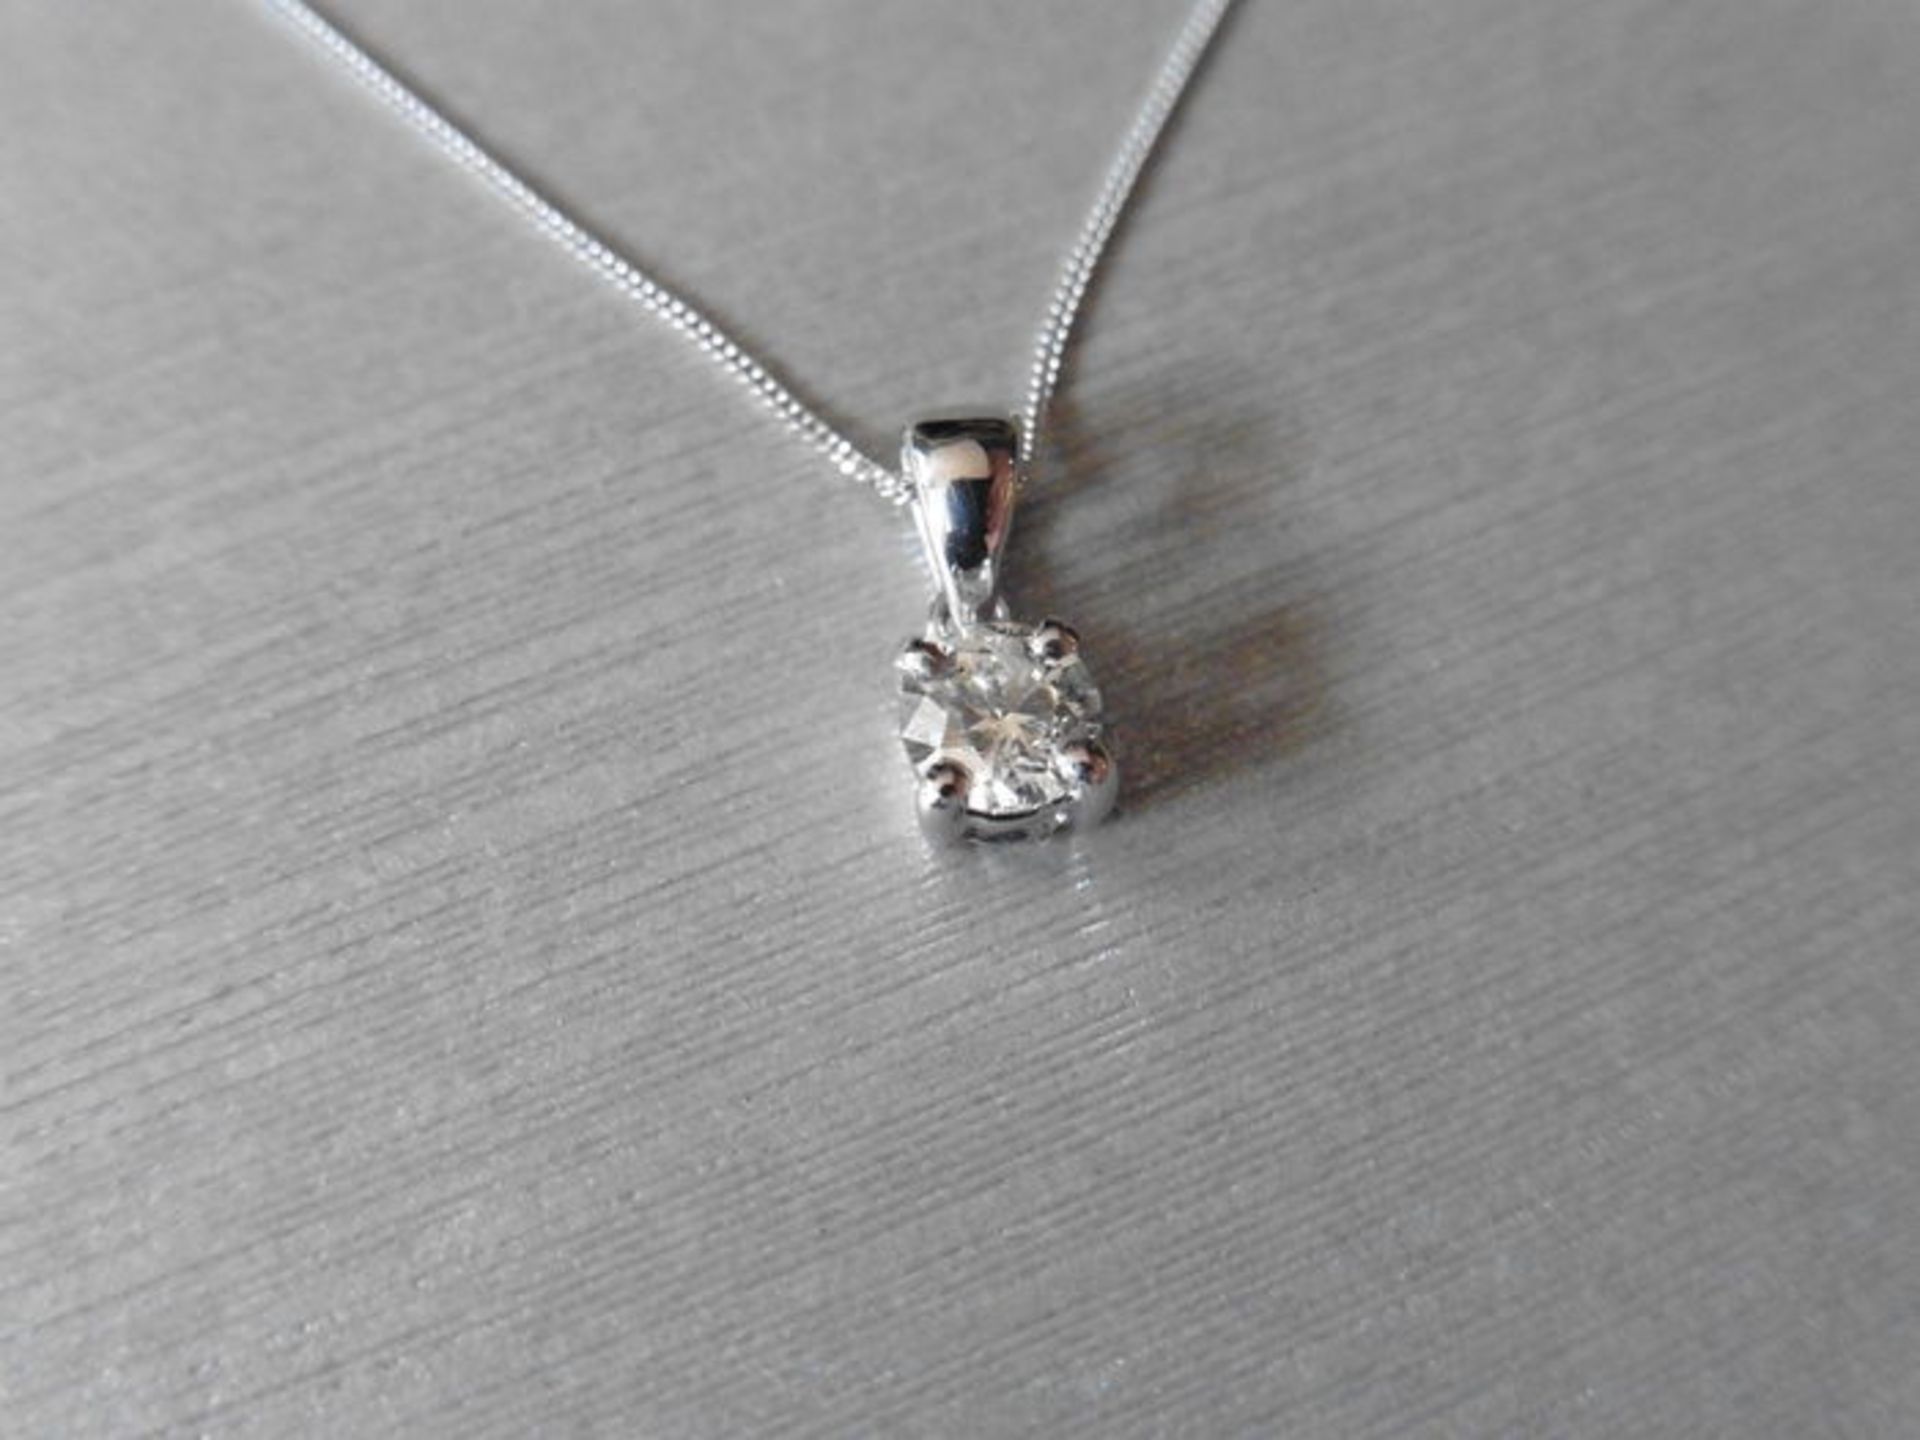 0.50ct diamond solitaire style pendant. Enhanced Brilliant cut diamond, H colour and si3 clarity.